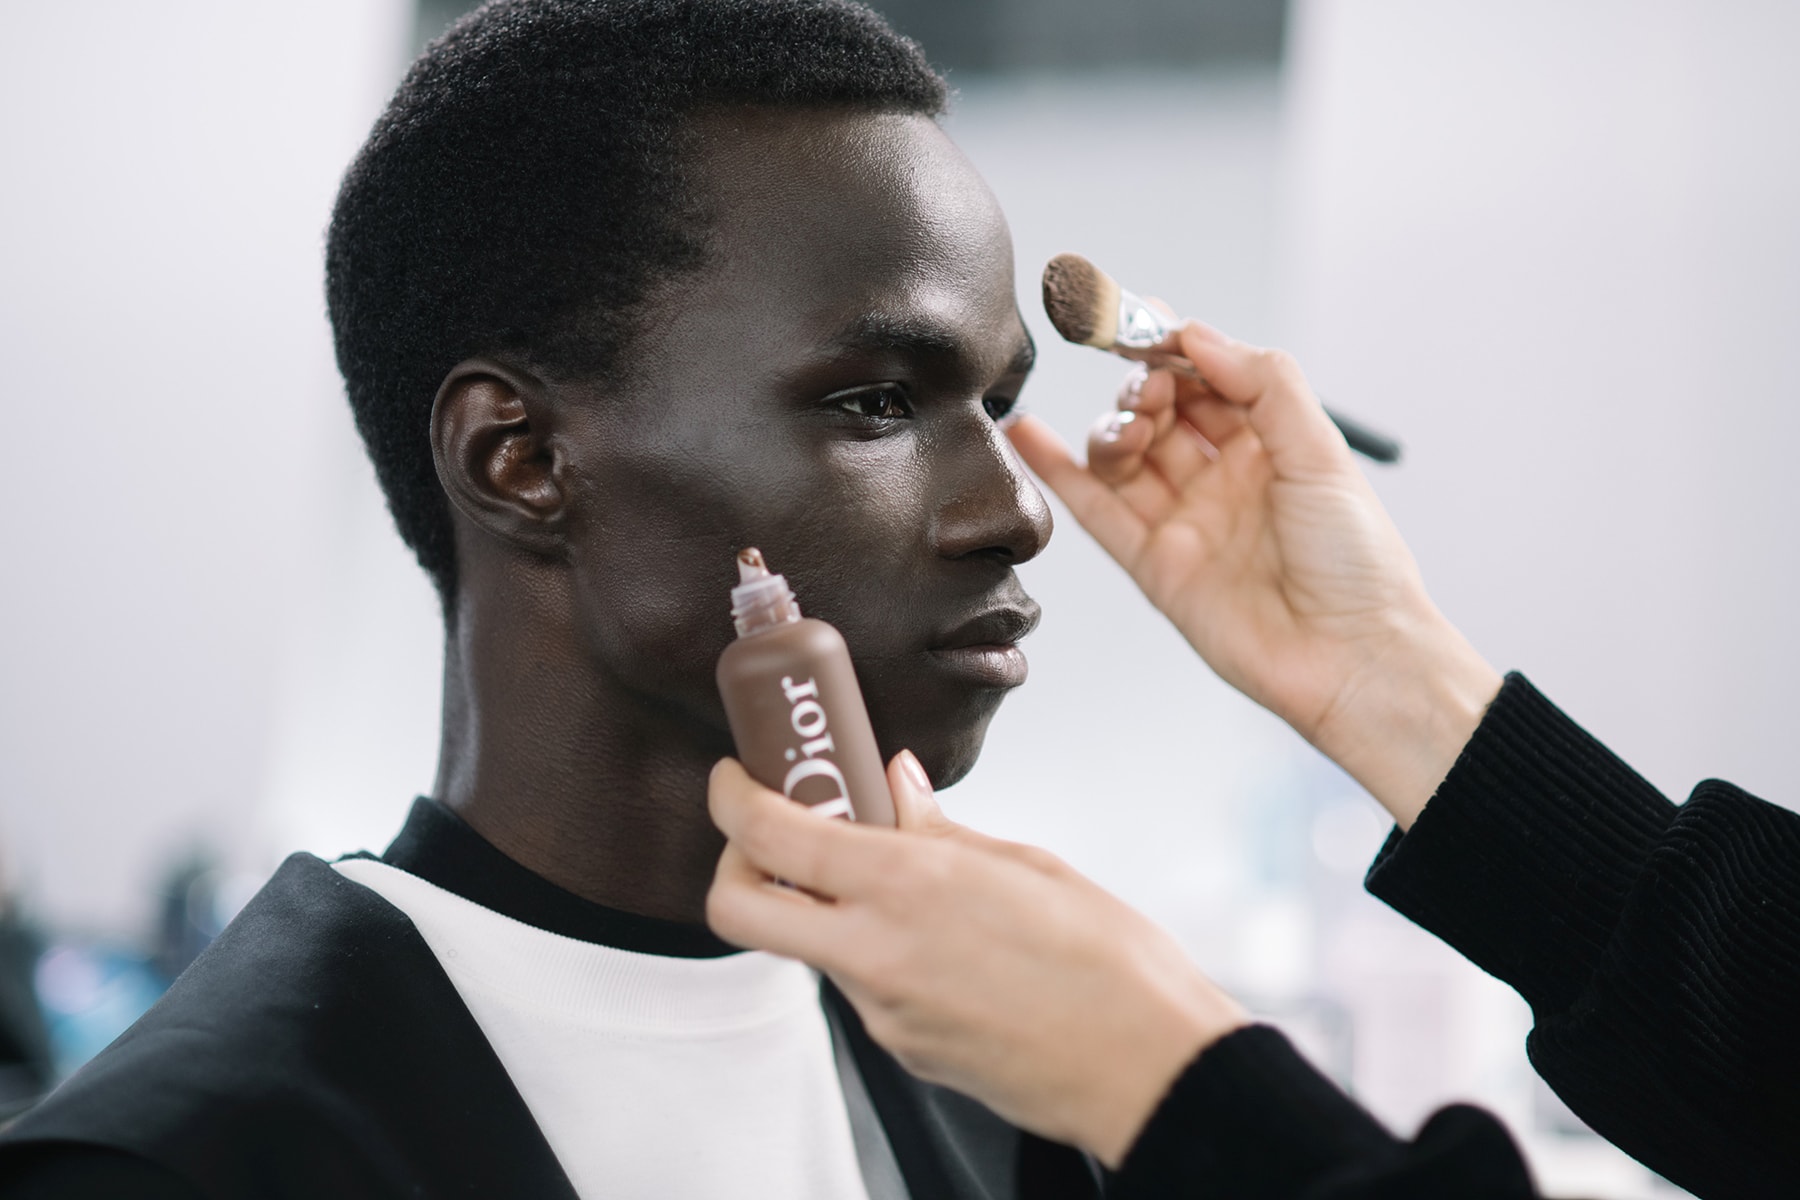 Can Men's Makeup Finally Gain Hype?